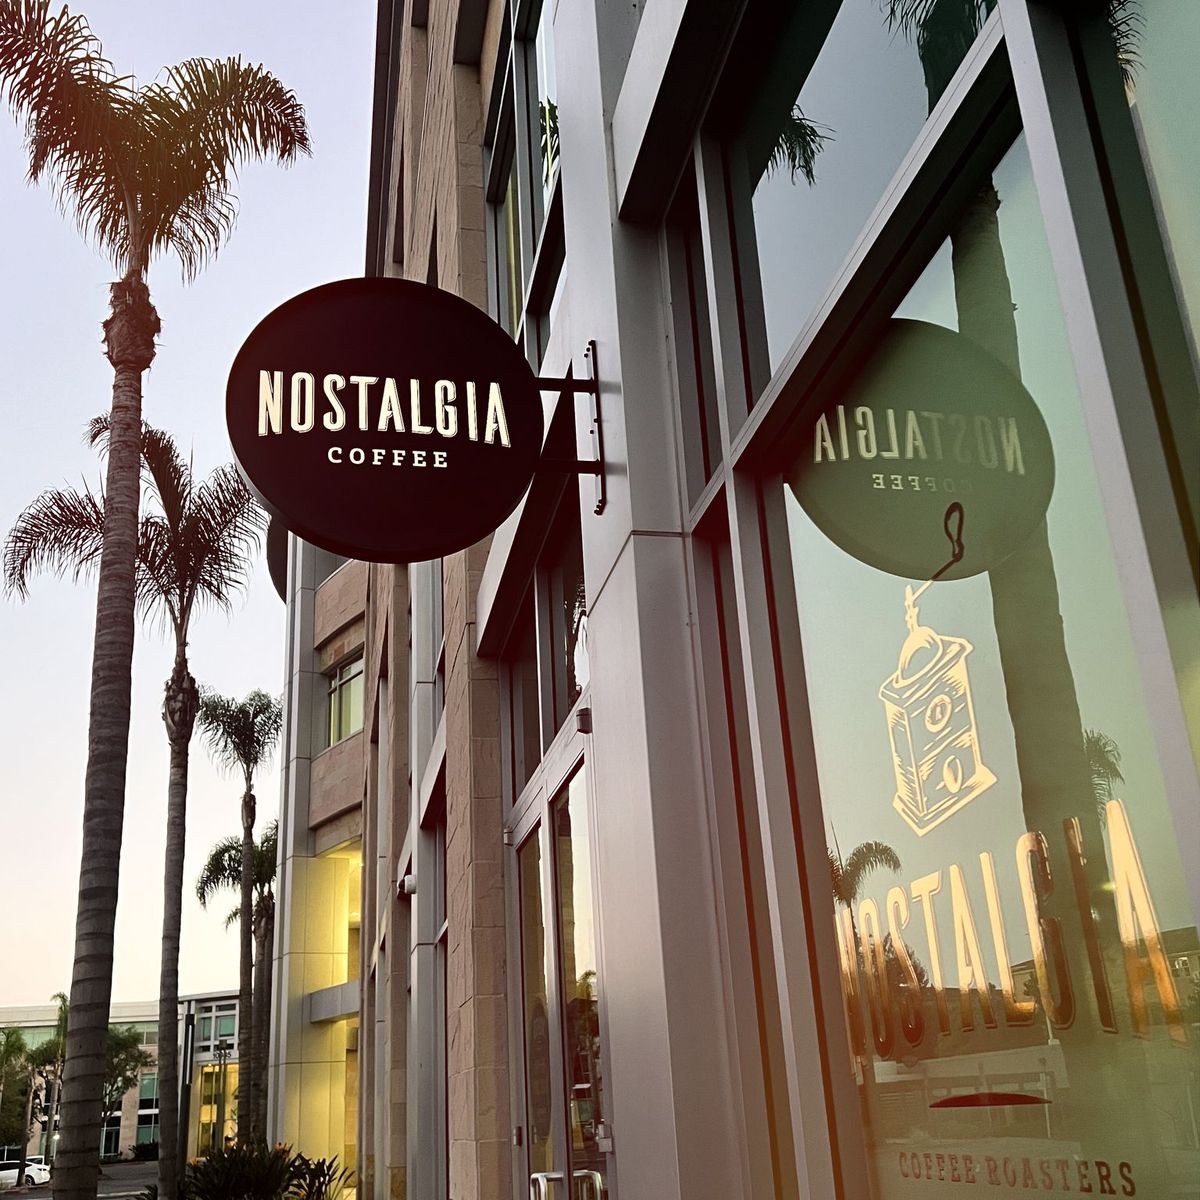 Nostalgia Coffee Roasters Cafe in San Diego, CA